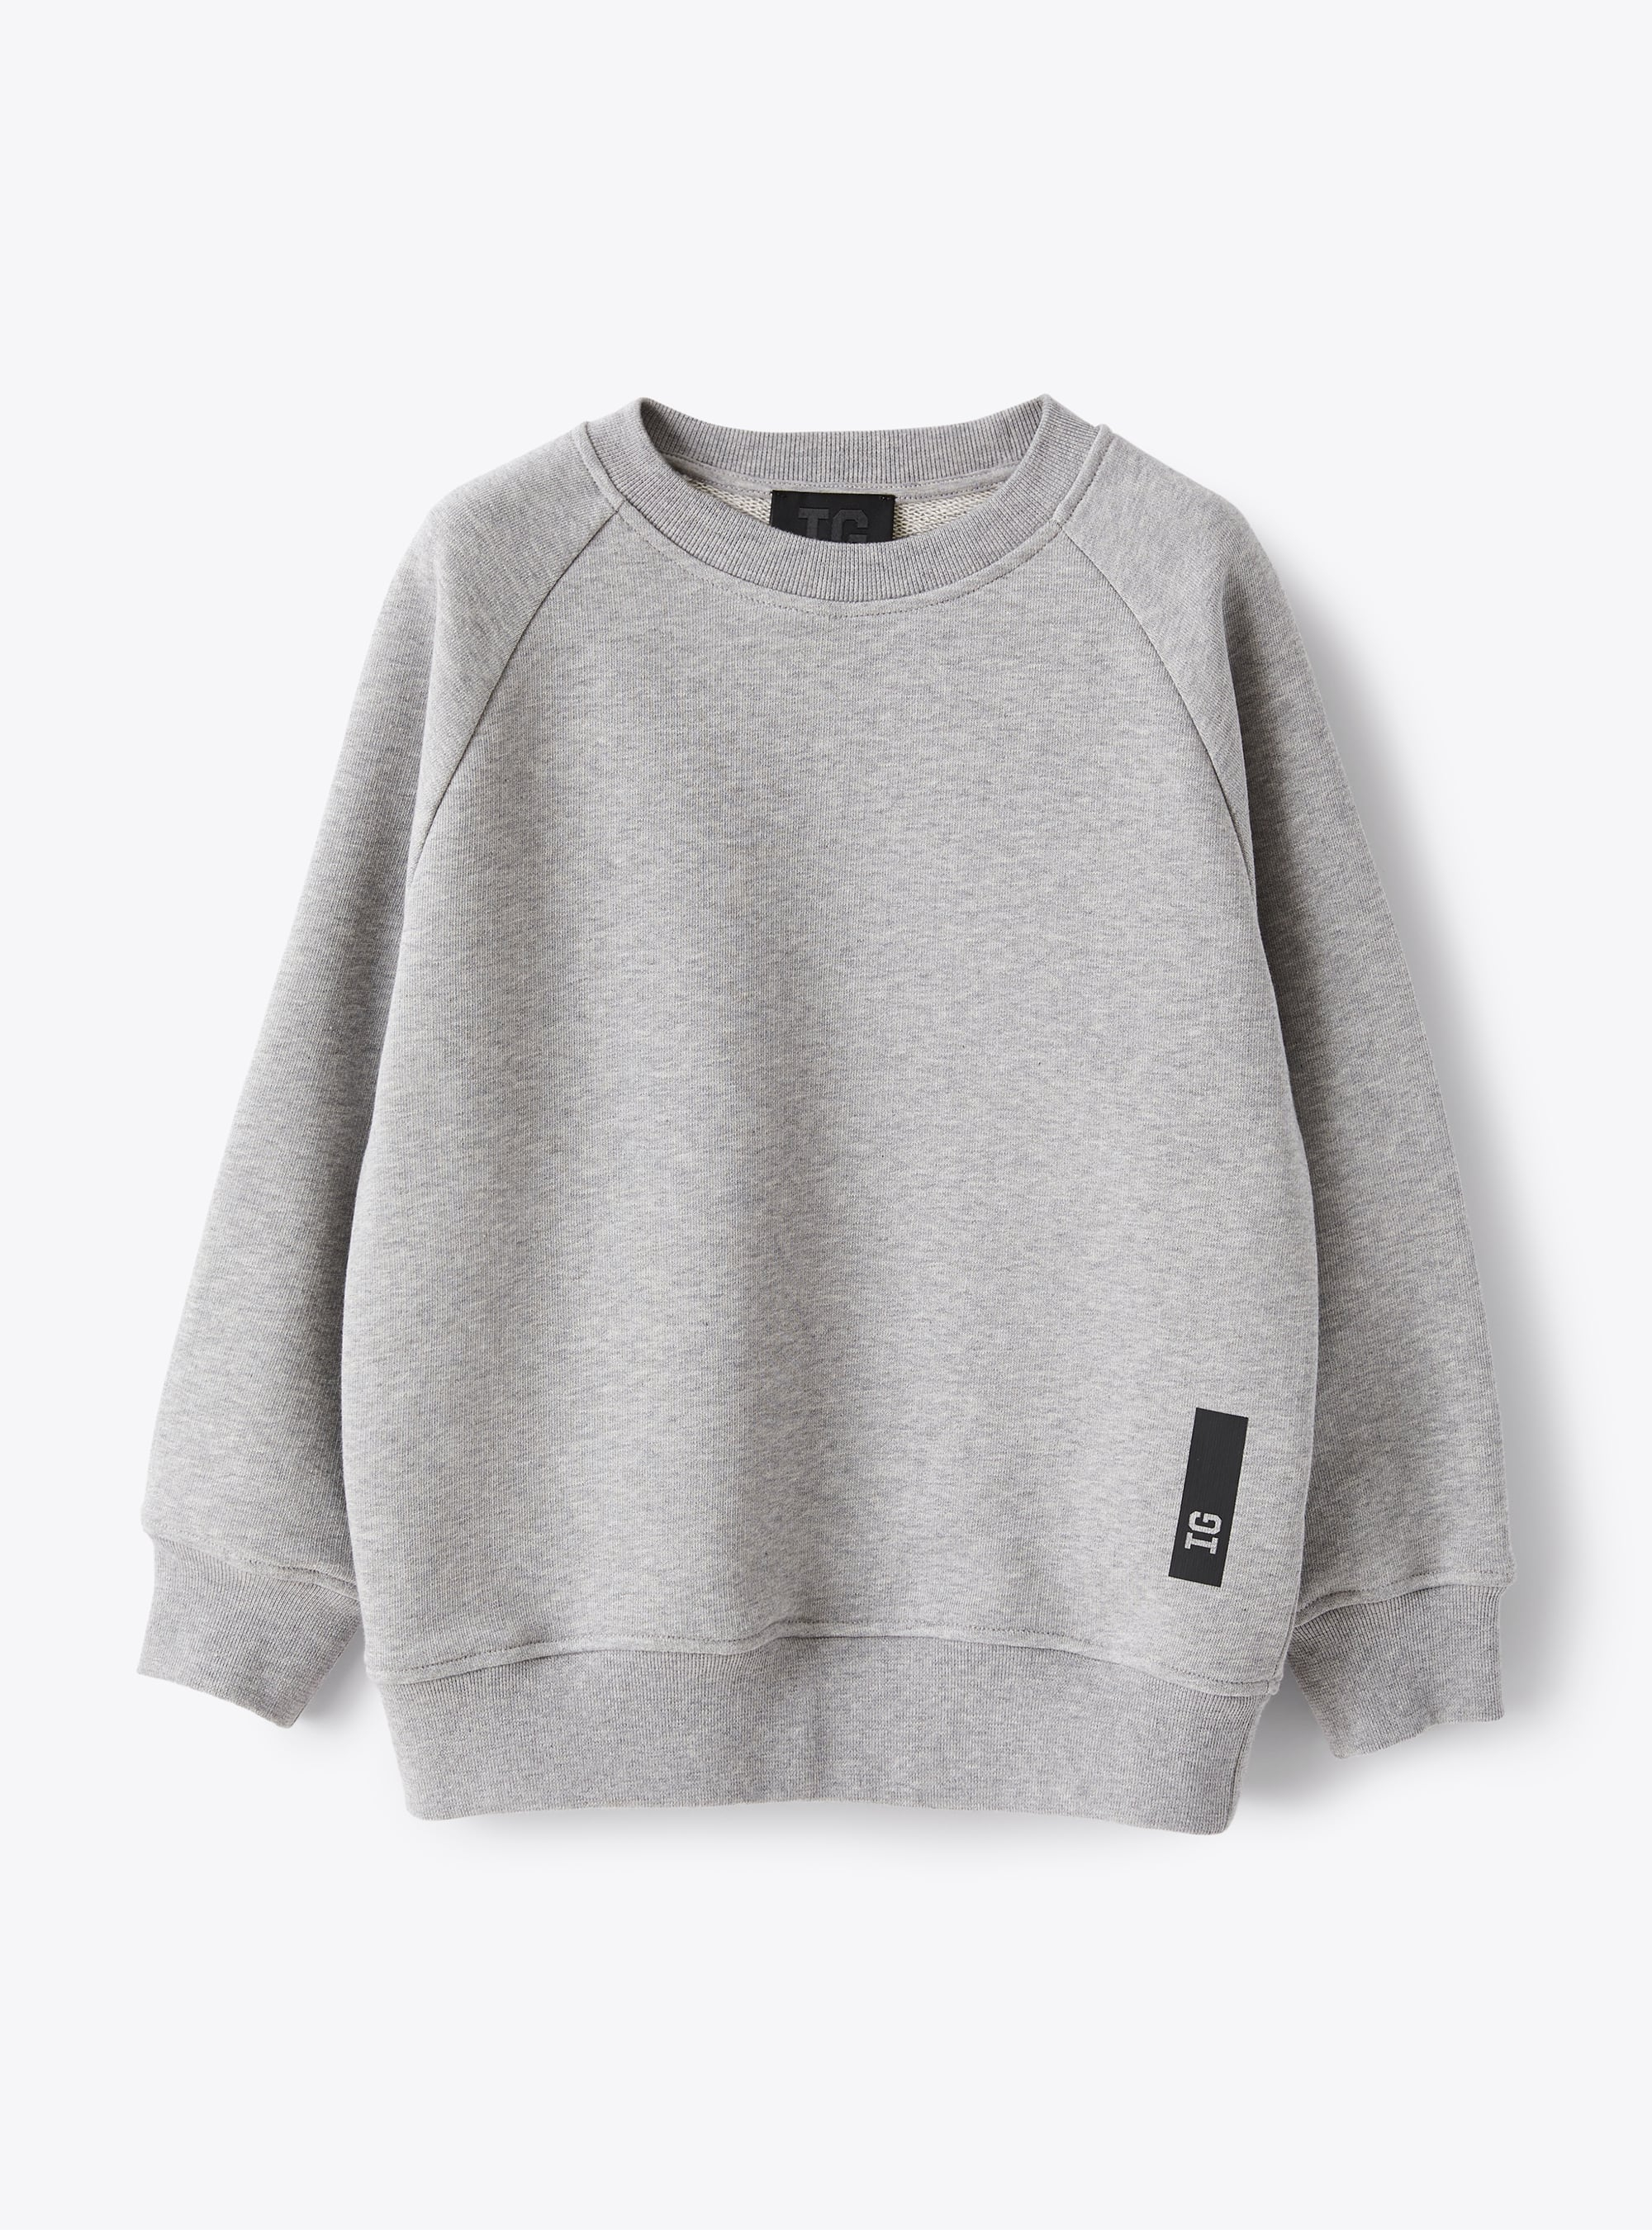 Sweat-shirt ras de cou gris chiné - Sweatshirts - Il Gufo